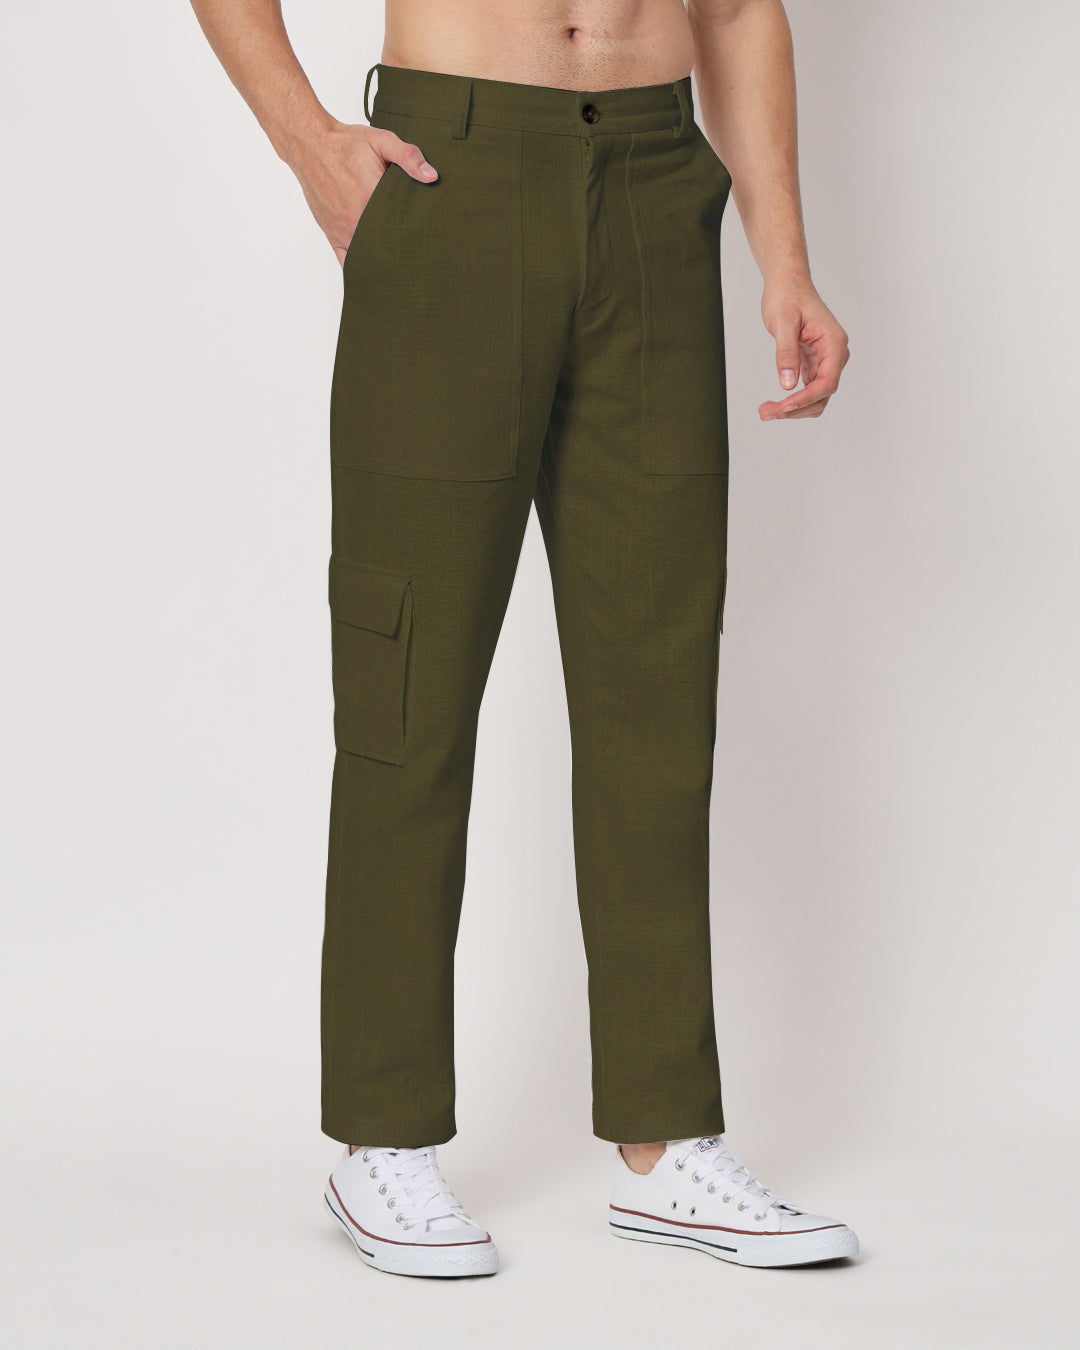 Function Flex Olive Green Men's Pants